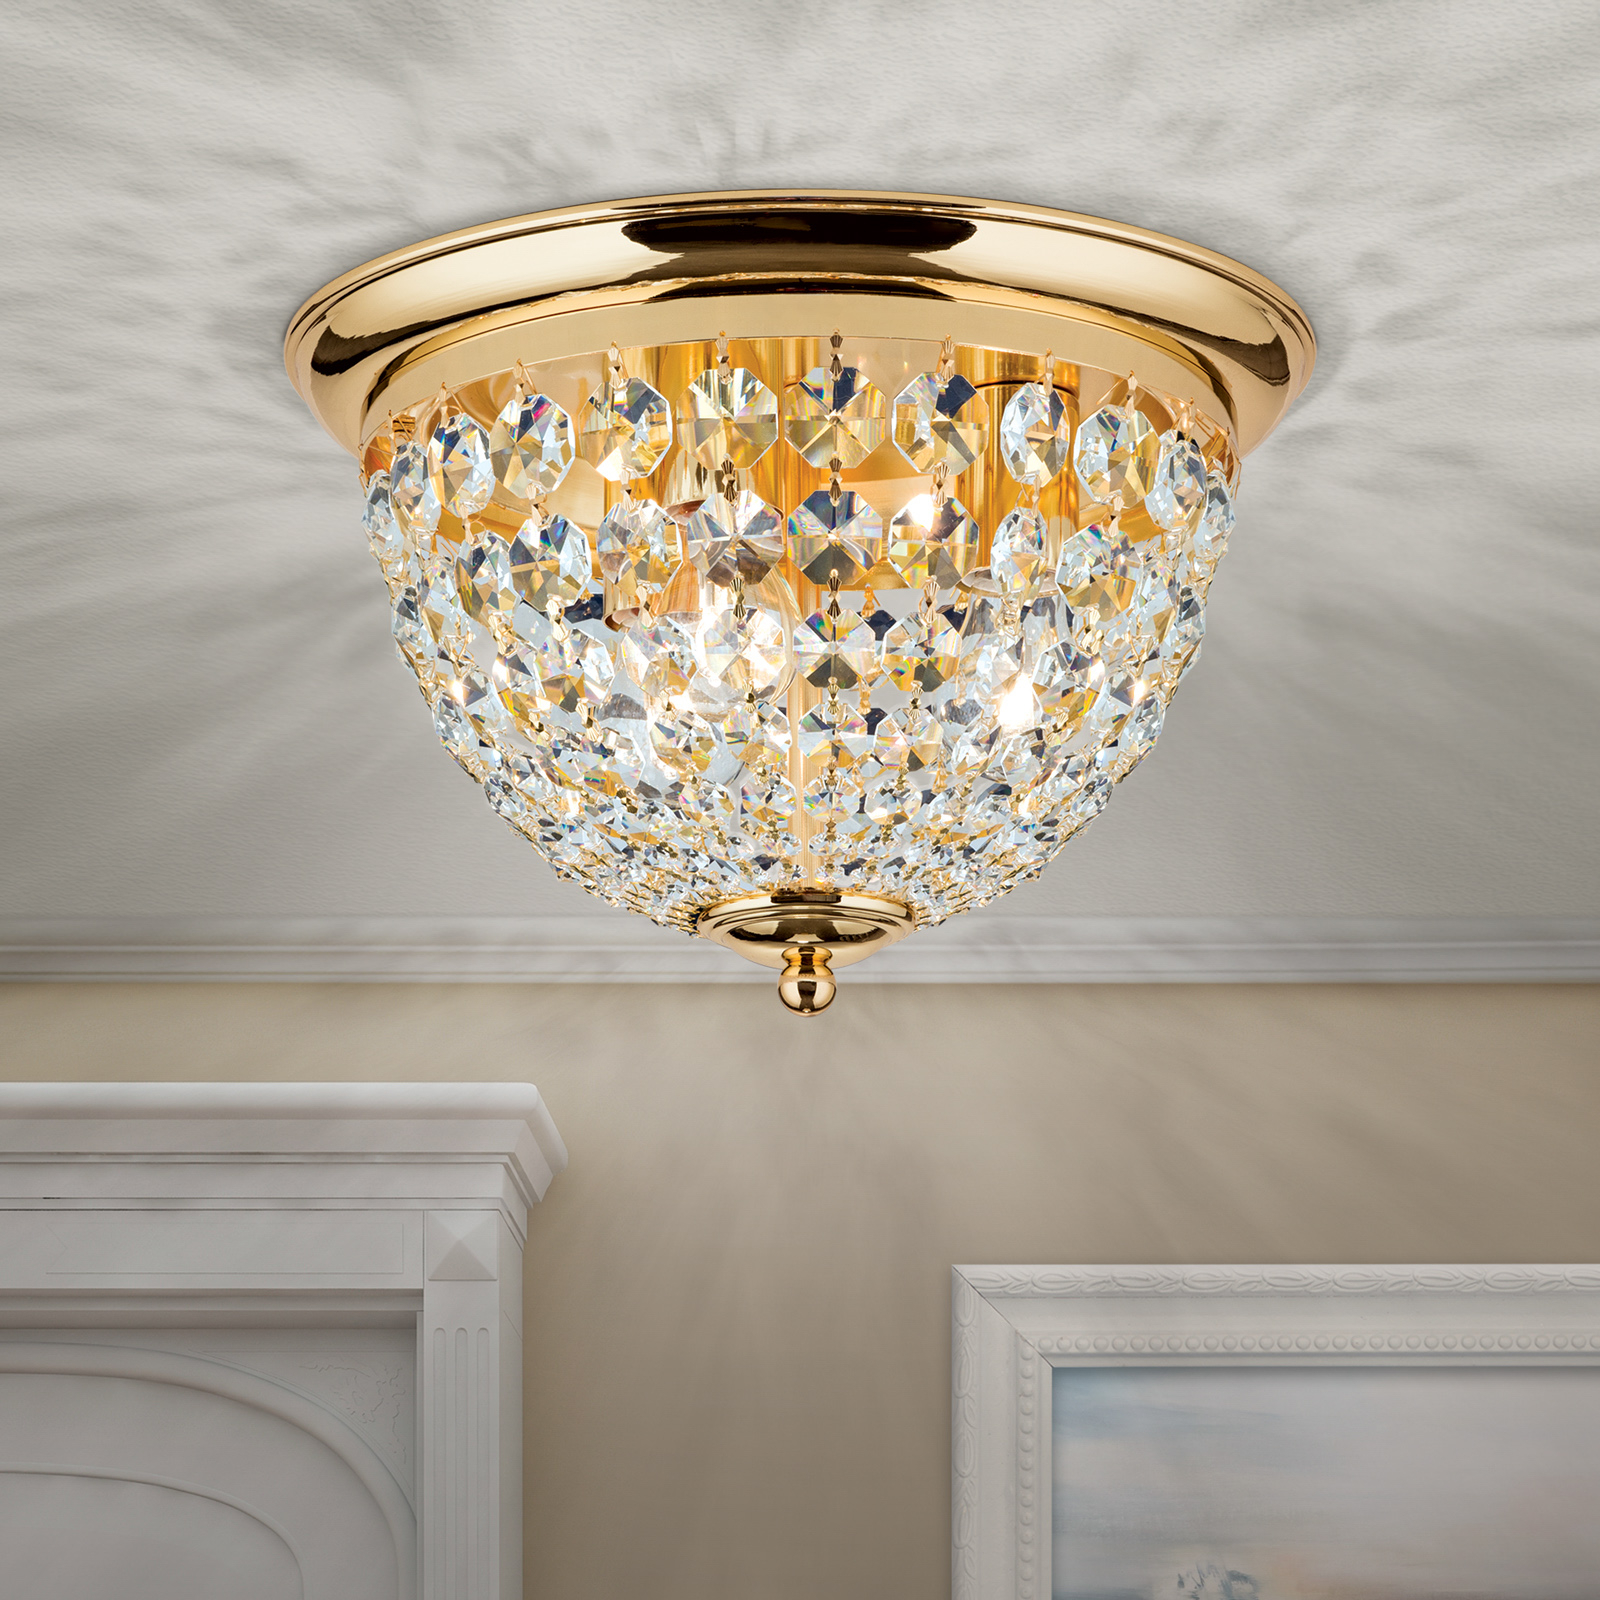 Plafondlamp Plafond, goud/transparant, Ø 35 cm